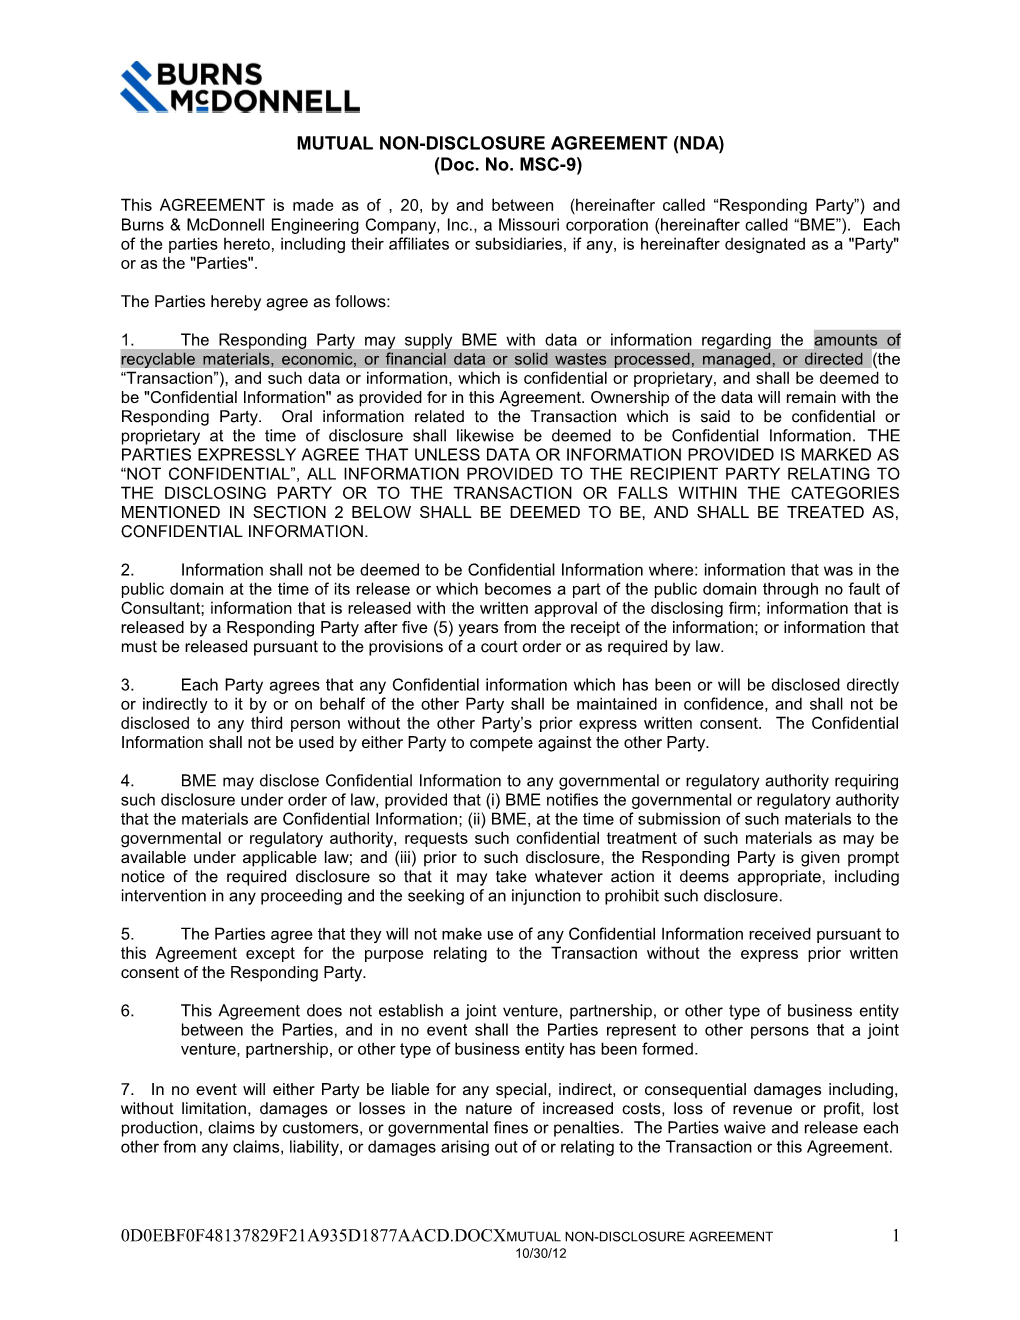 MSC-9 Mutual Non-Disclosure Agreement